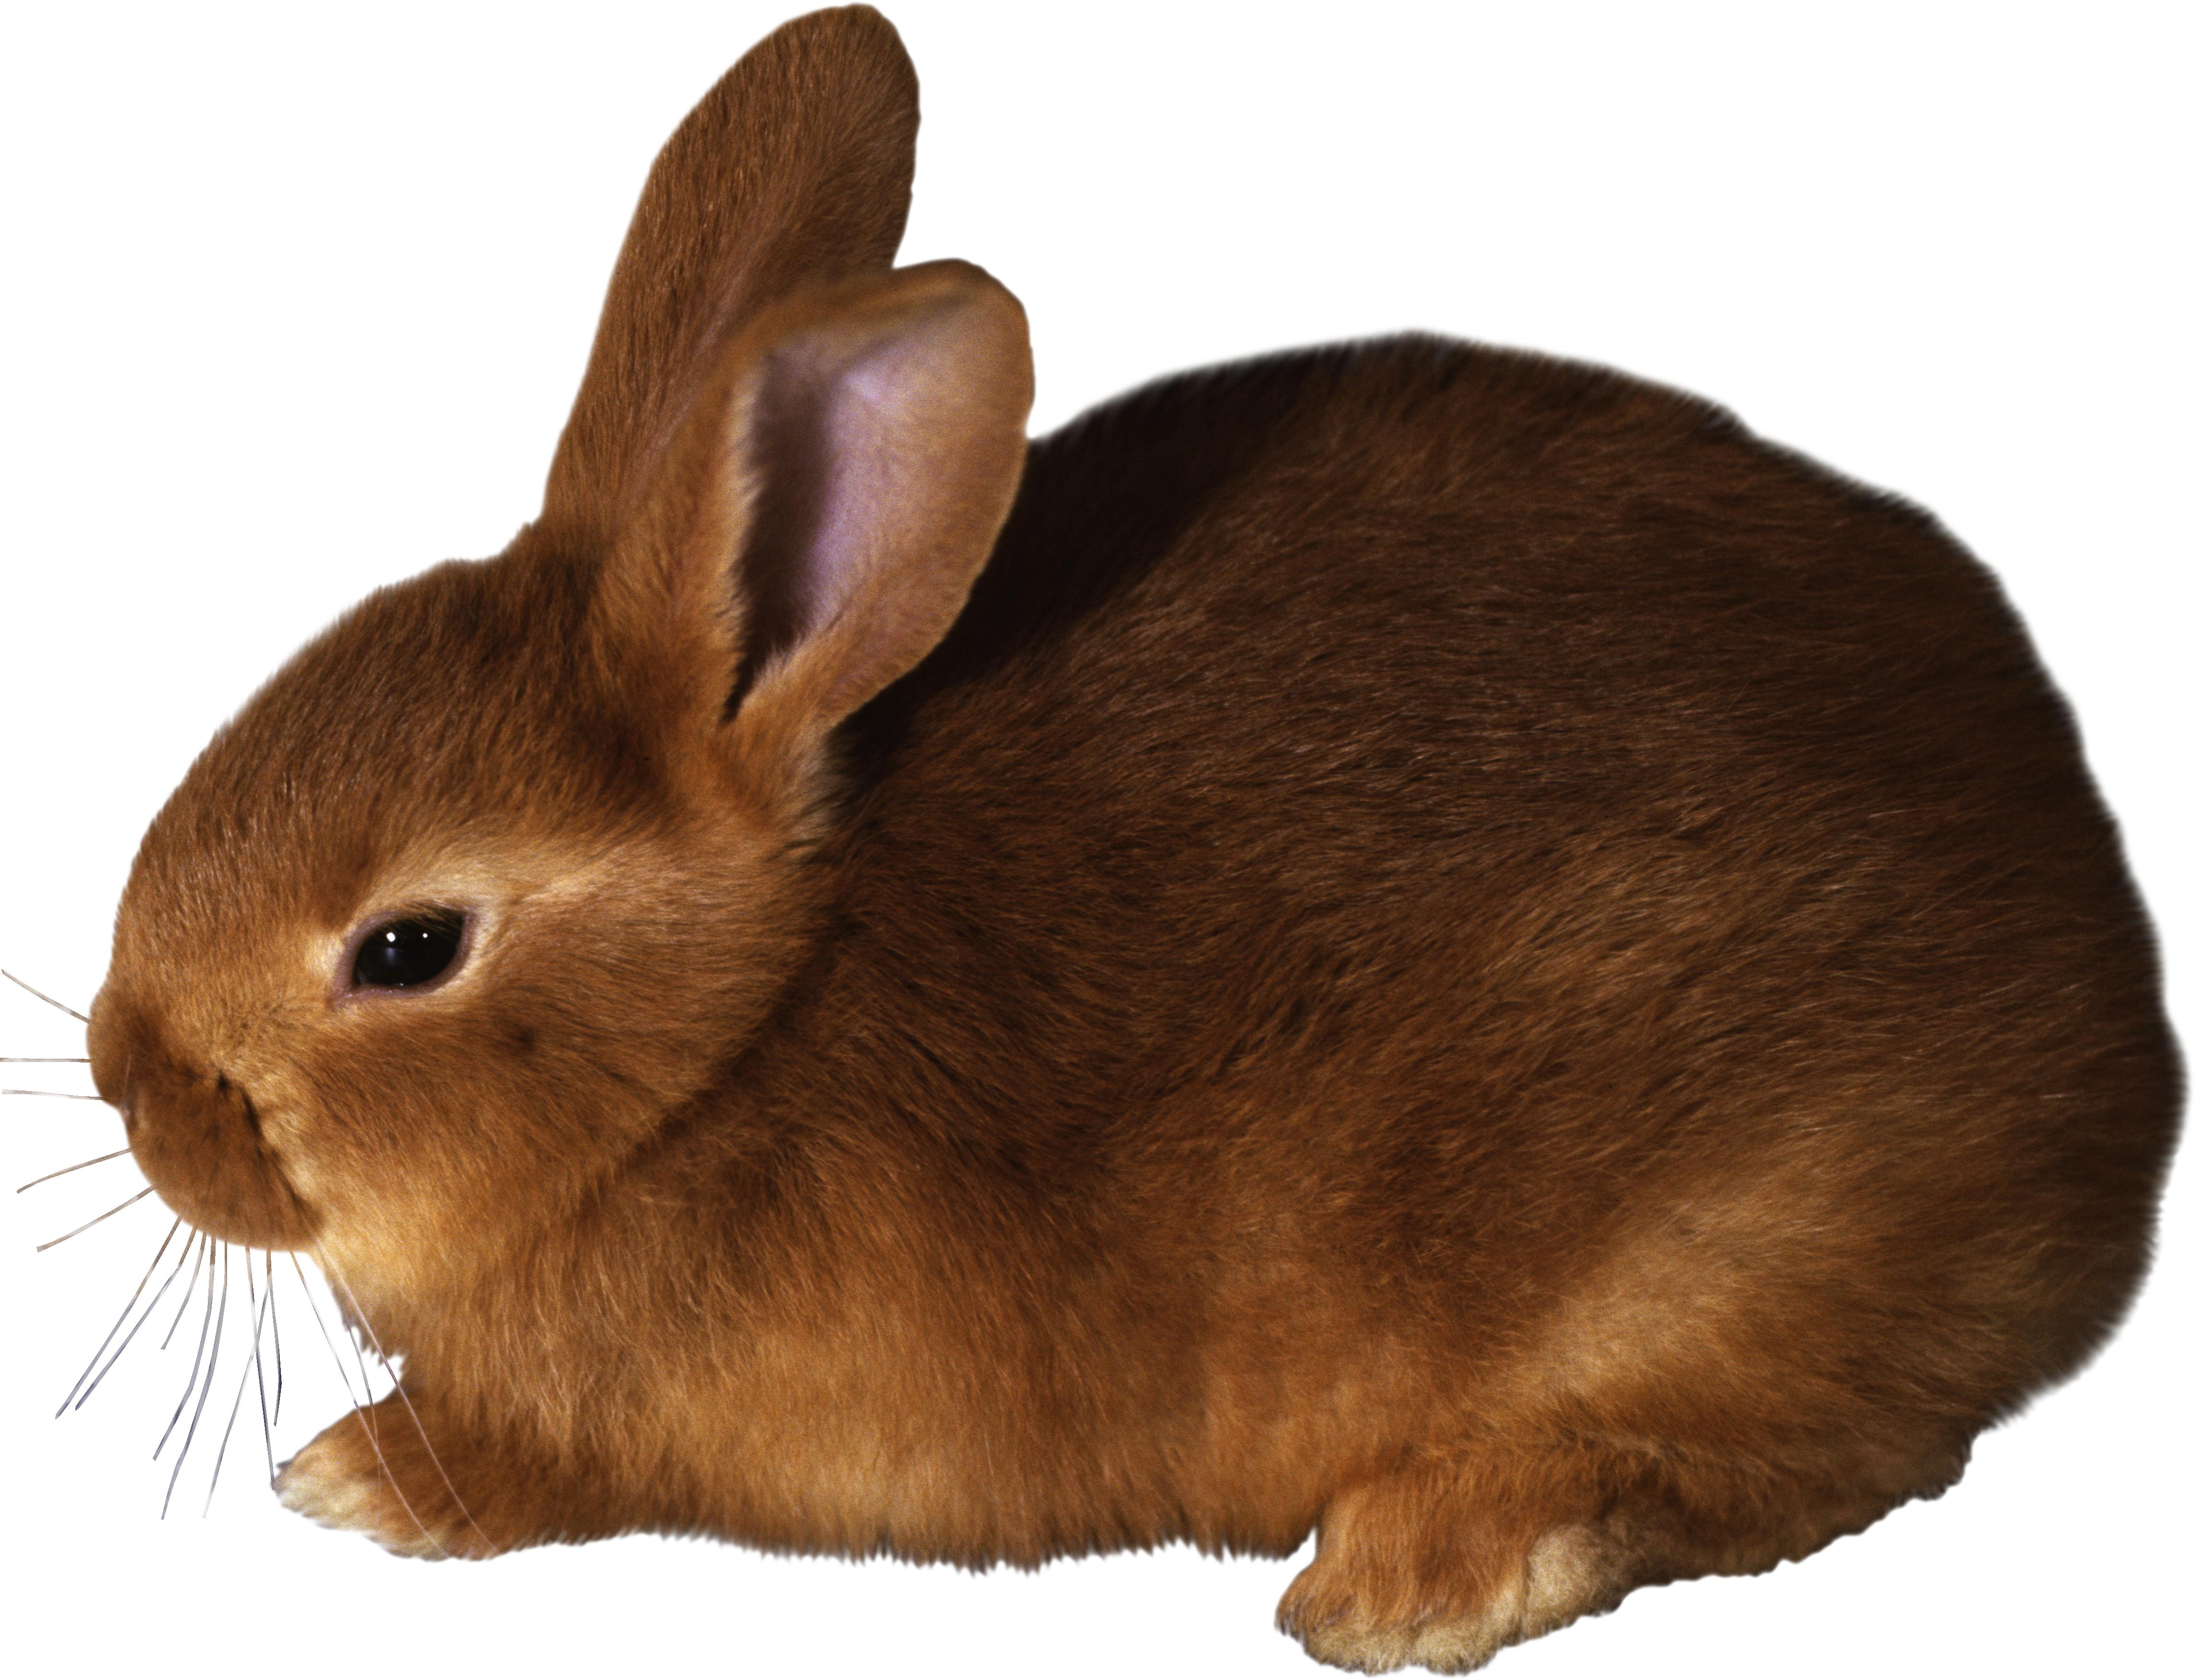 rabbit PNG